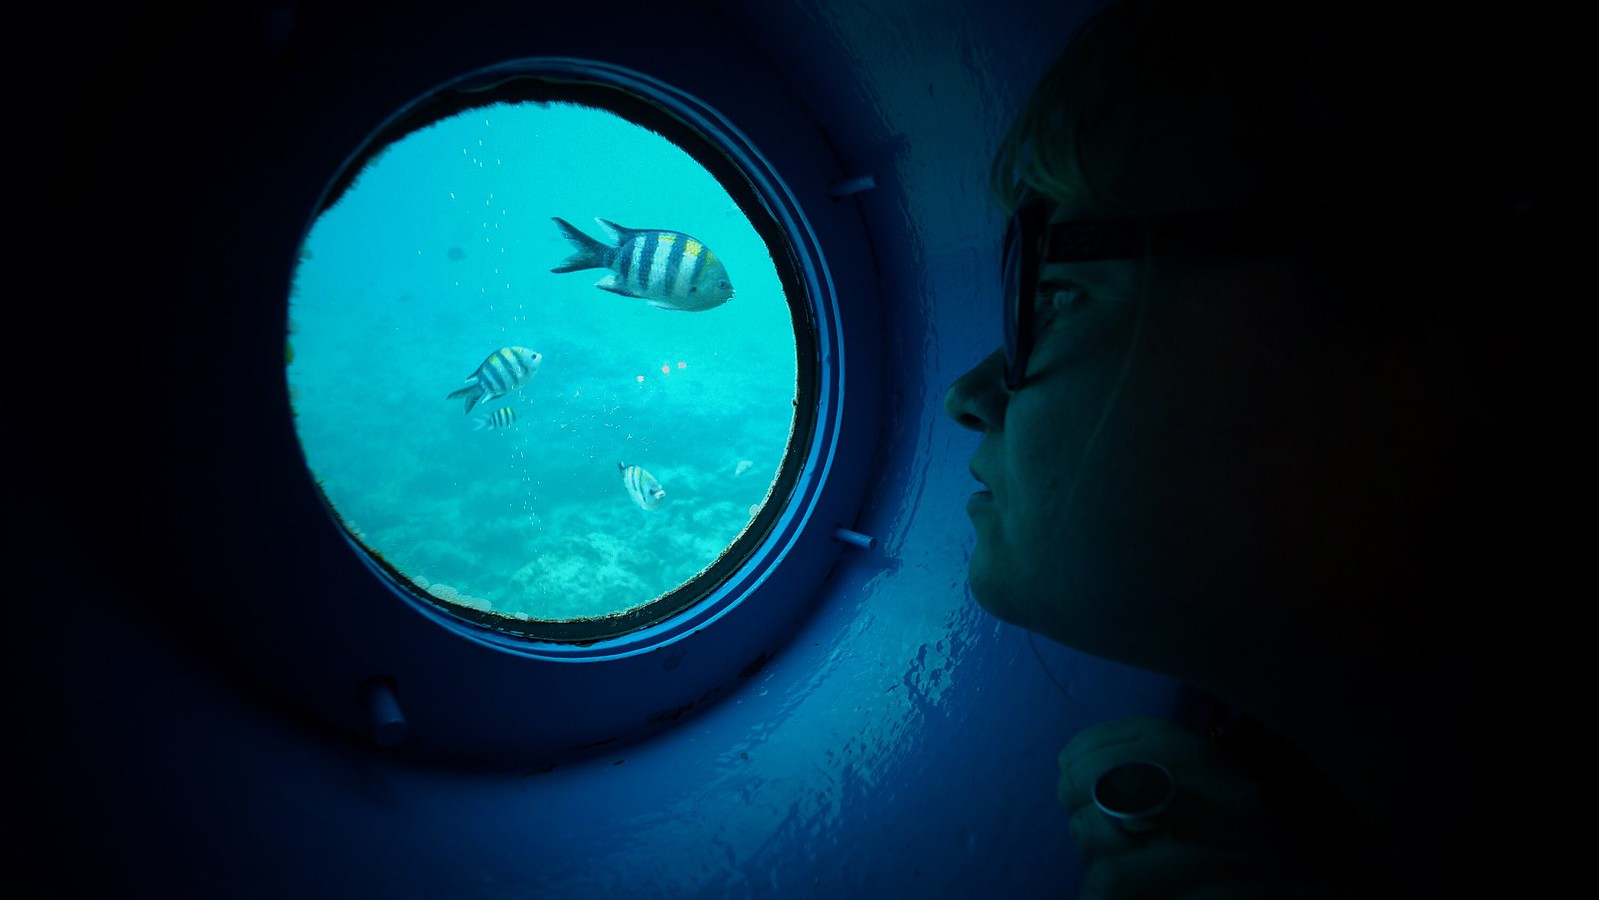 Ambré looking for Nemo (She found him) #SonyA7 #Voigtlander12mm #Okinawa #japan15 #foto